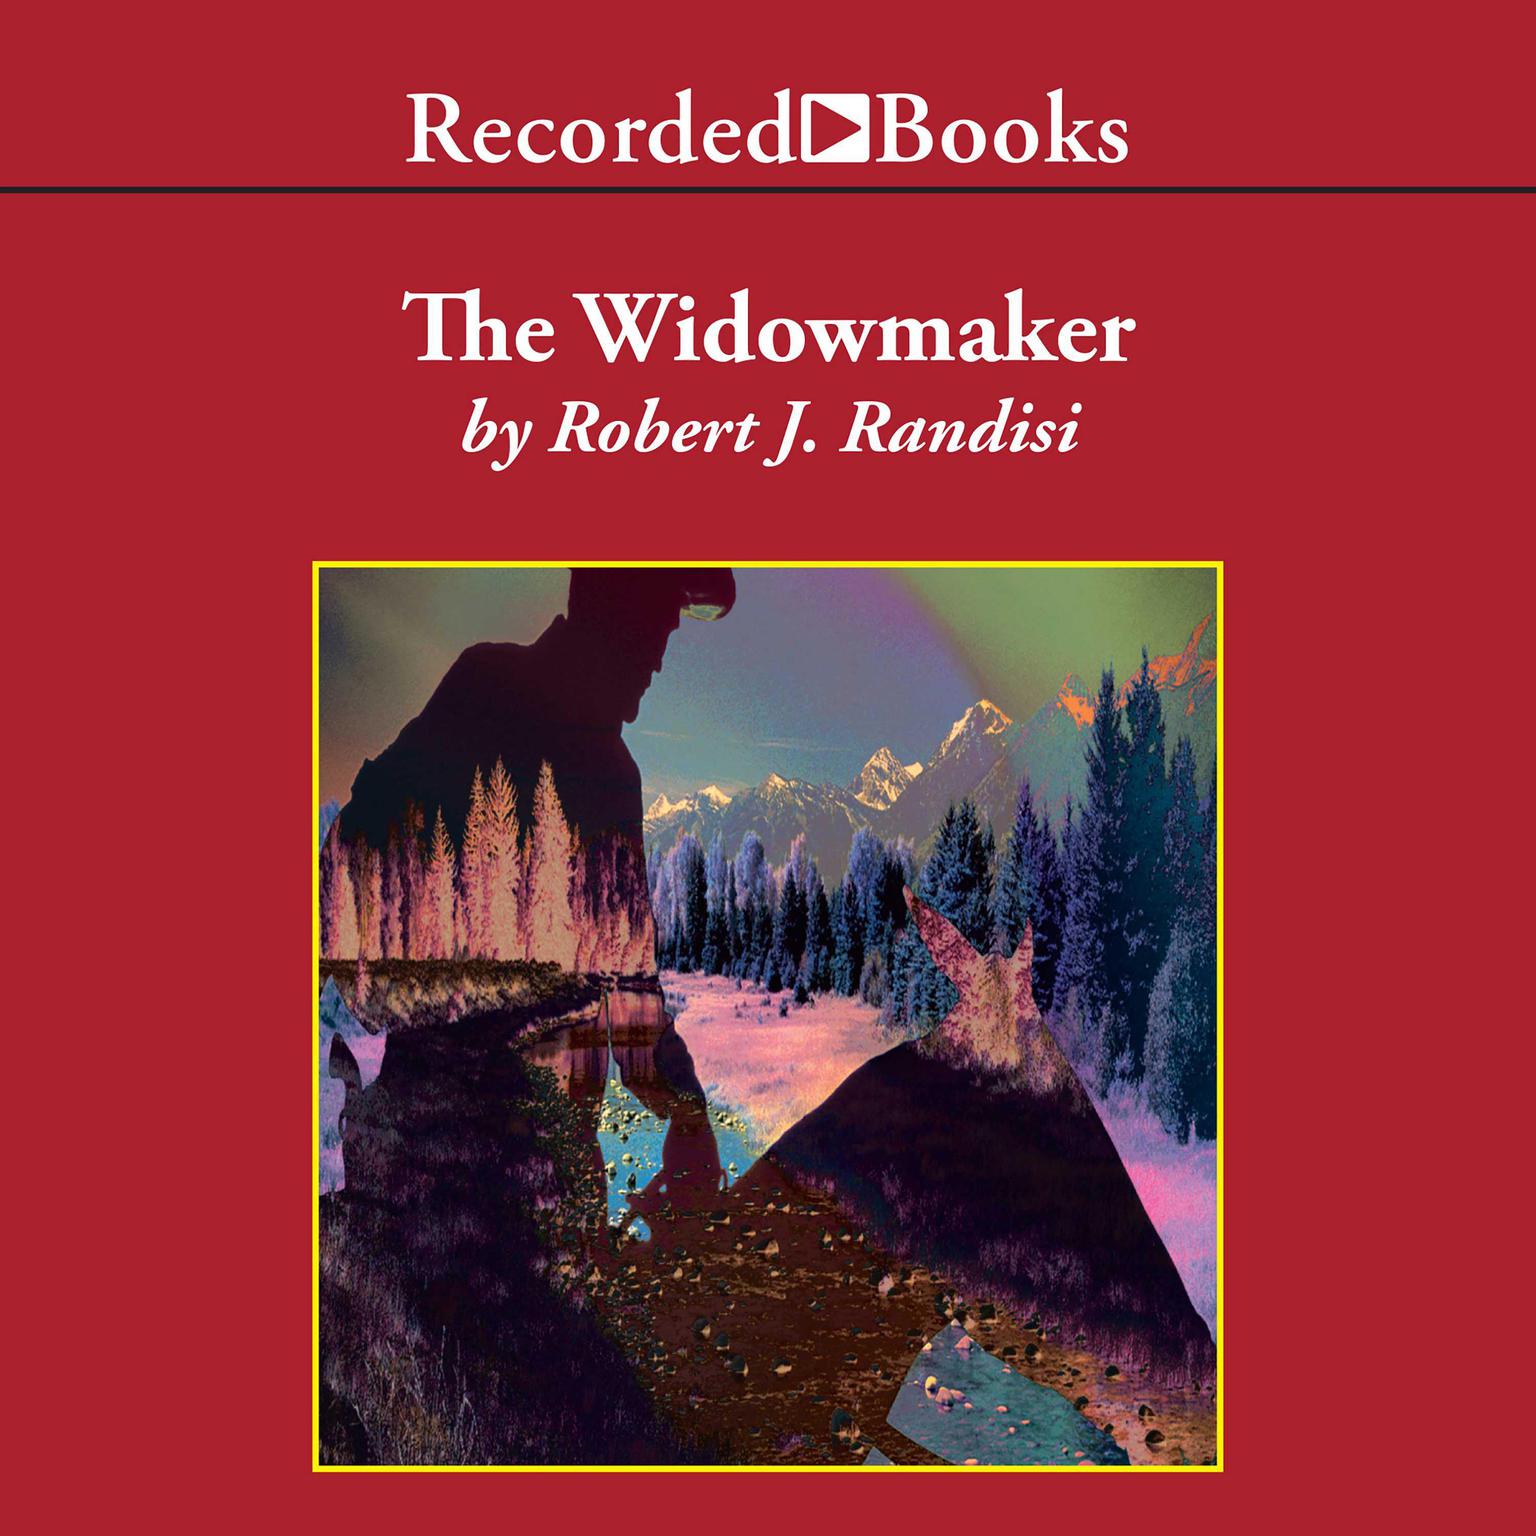 Turnback Creek Audiobook, by Robert J. Randisi